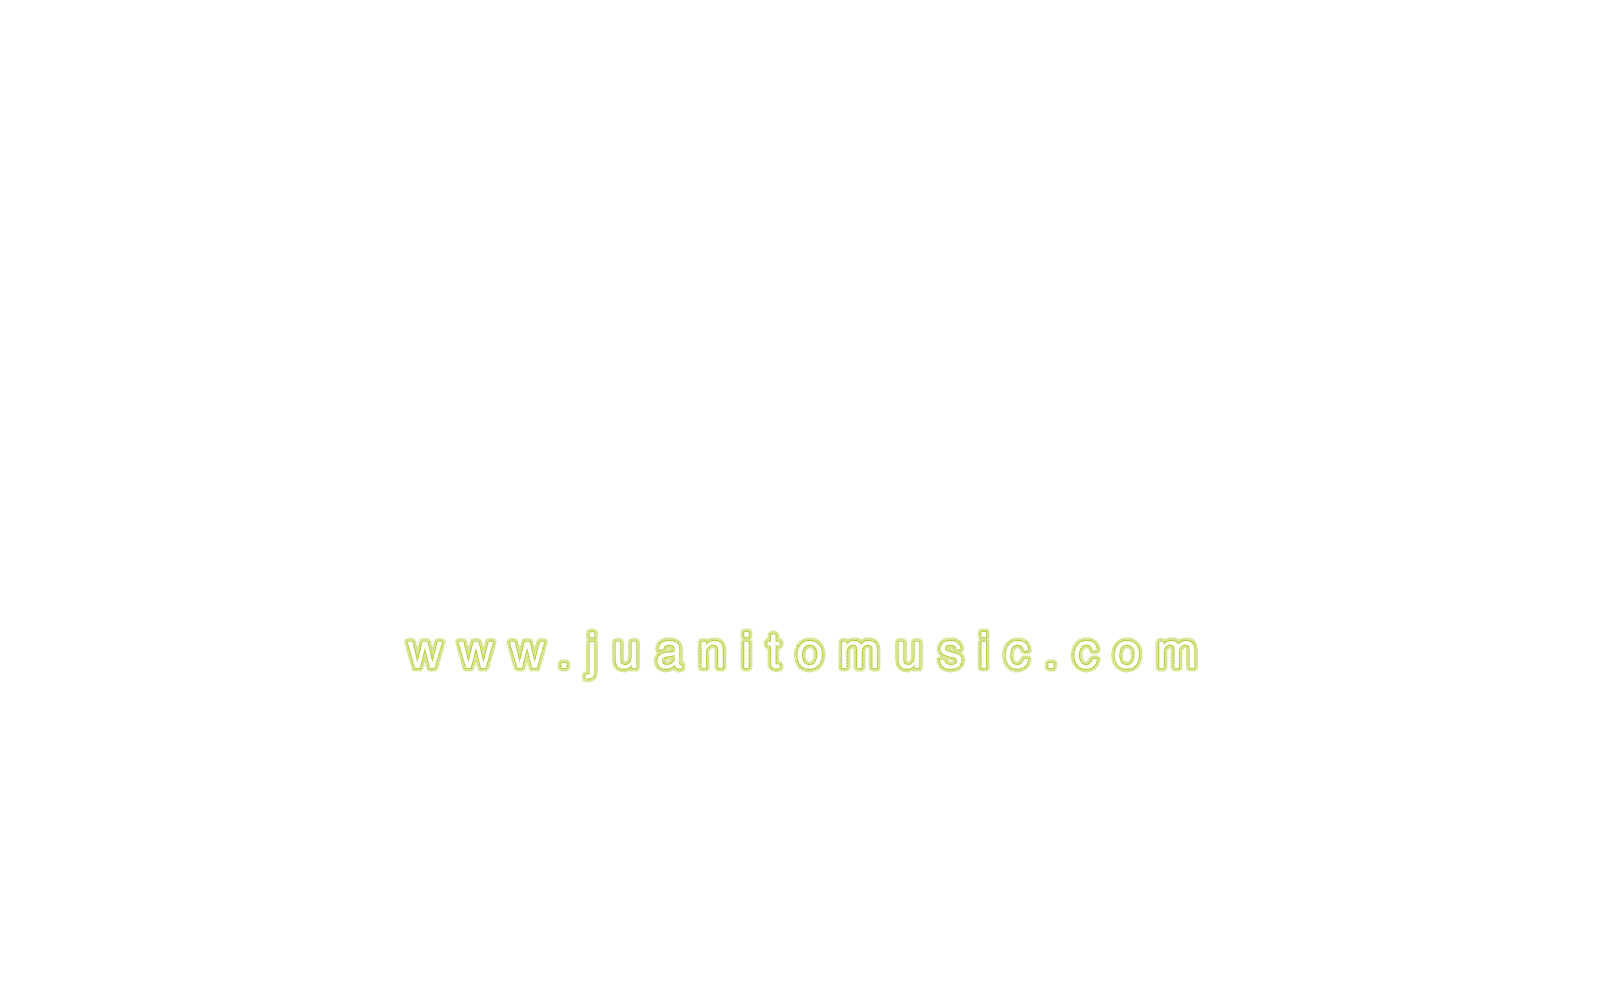 Juanito –  www.juanitomusic.com